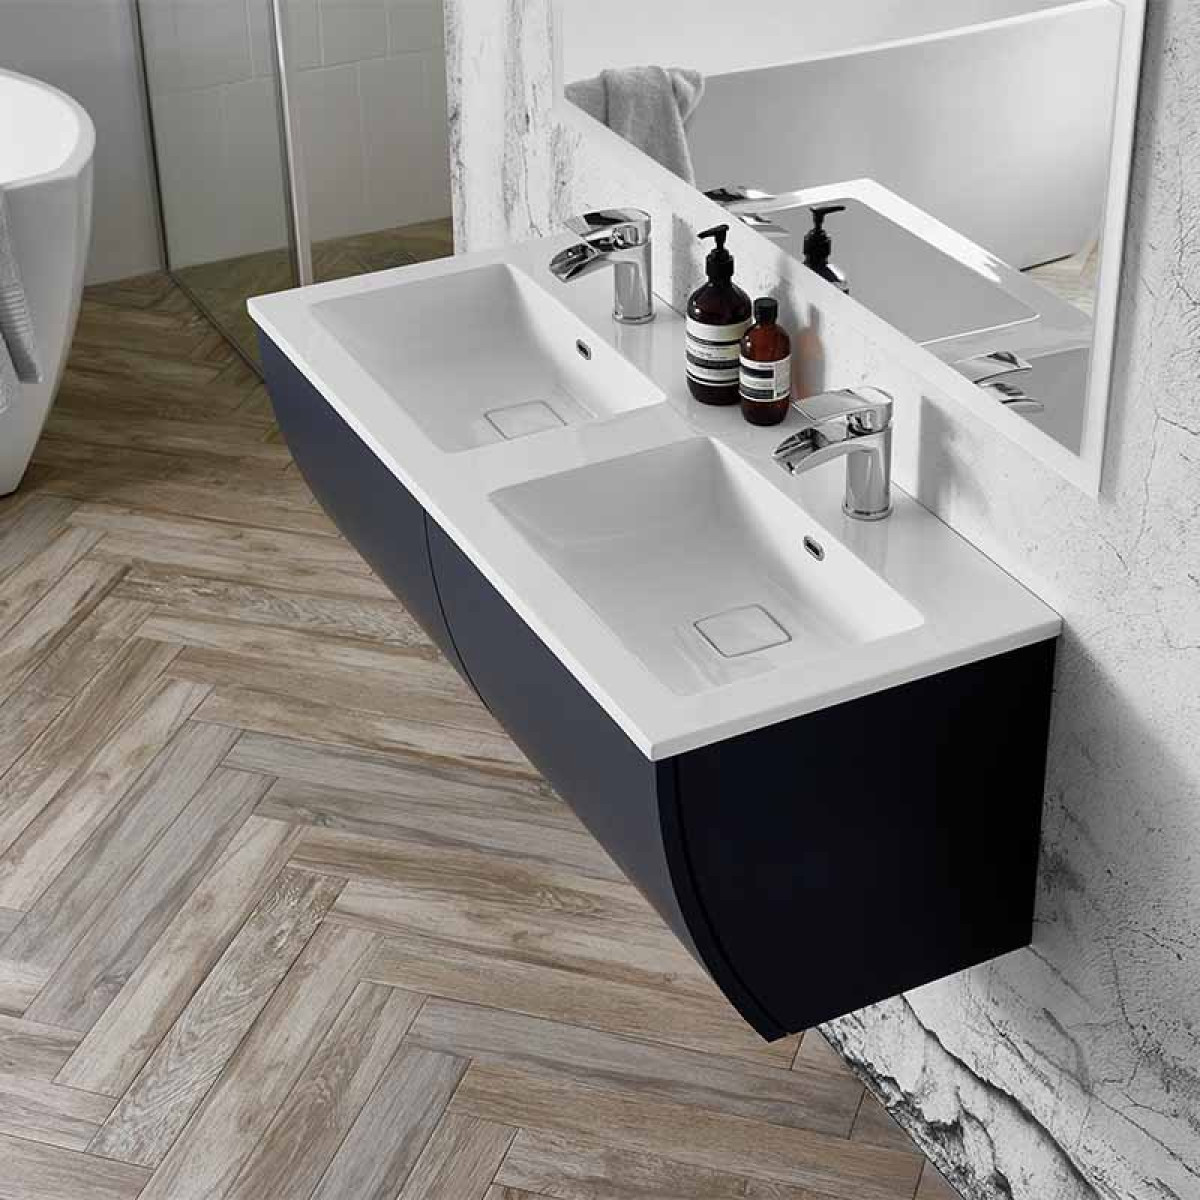 Wall Hung Indigo Vanity Unit Double Basin, Double Sink Vanity Unit With Toilet